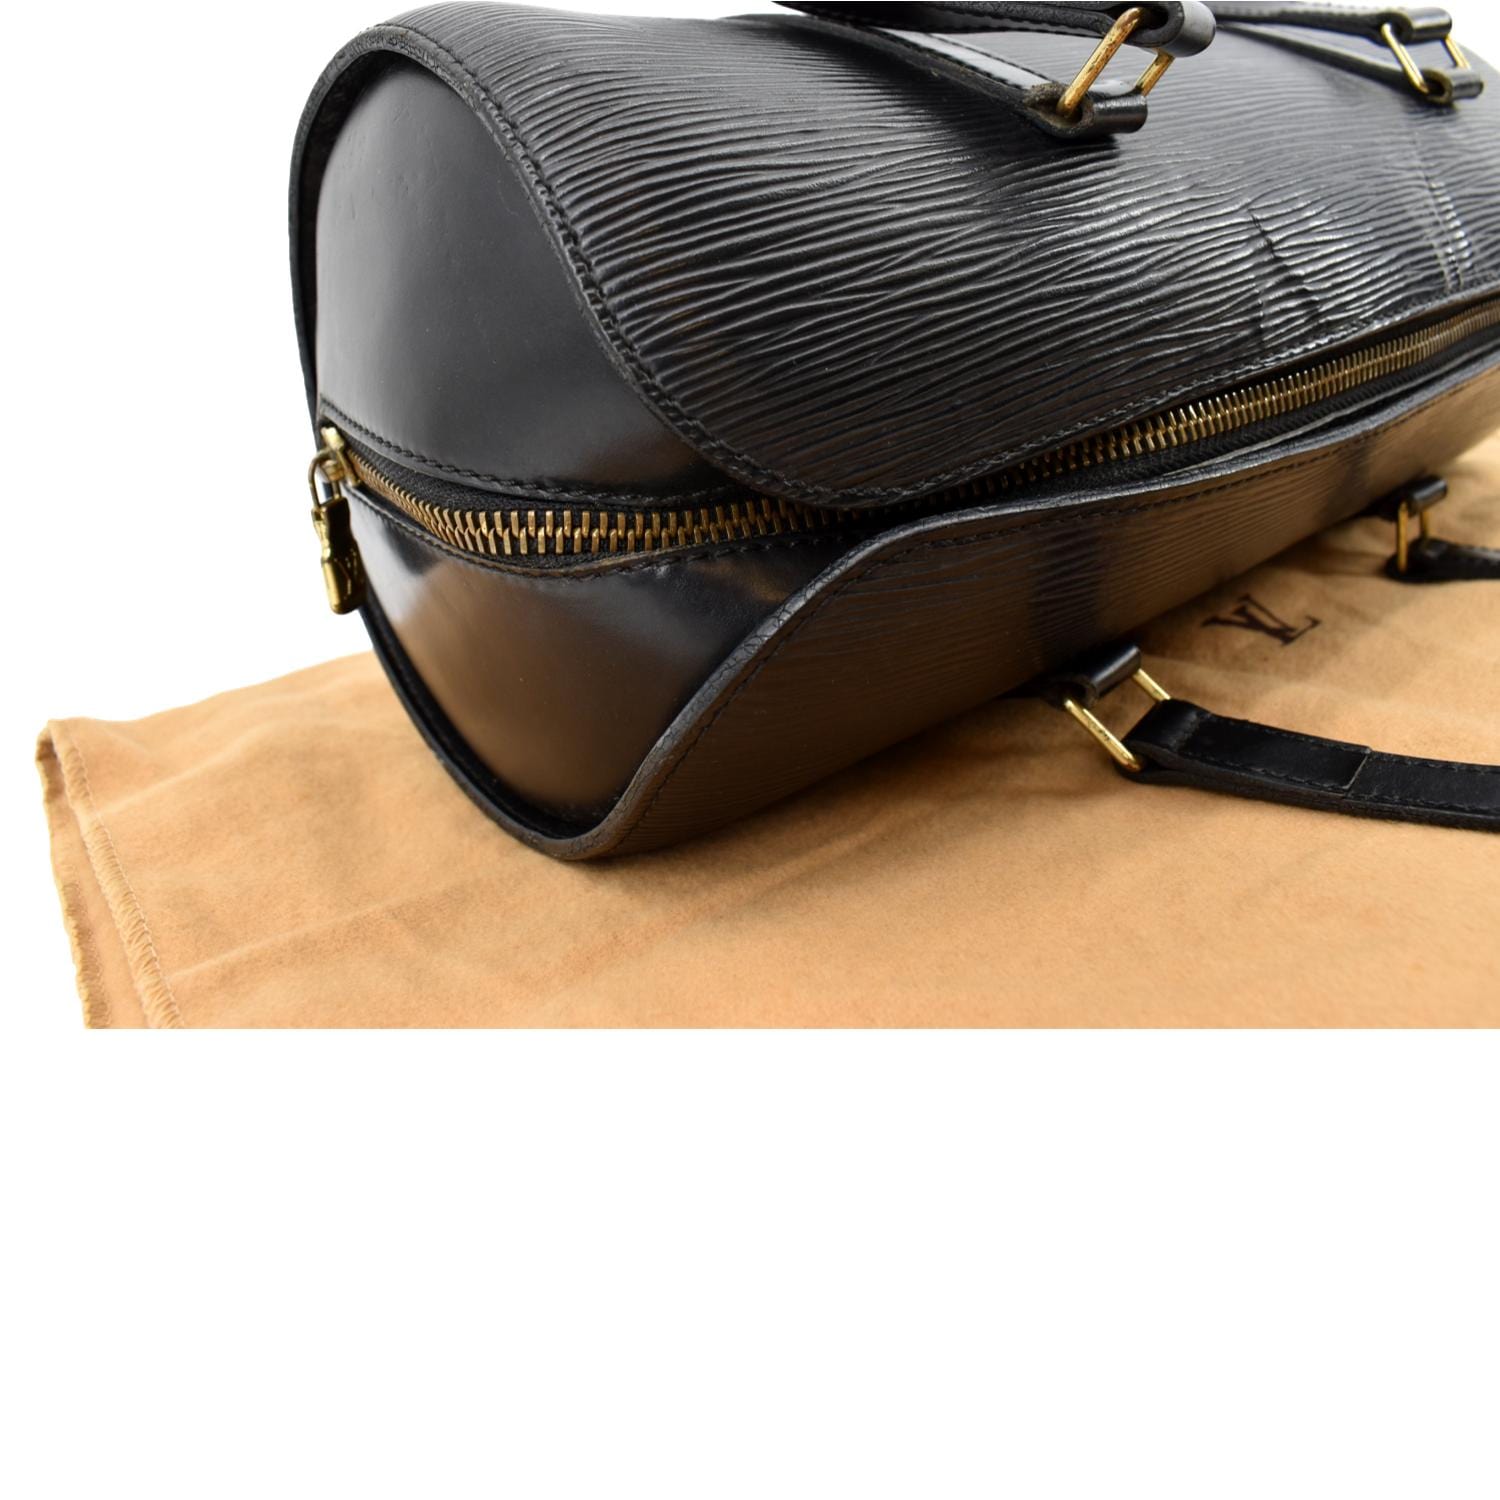 LOUIS VUITTON Papillon Epi Leather Handbag Black